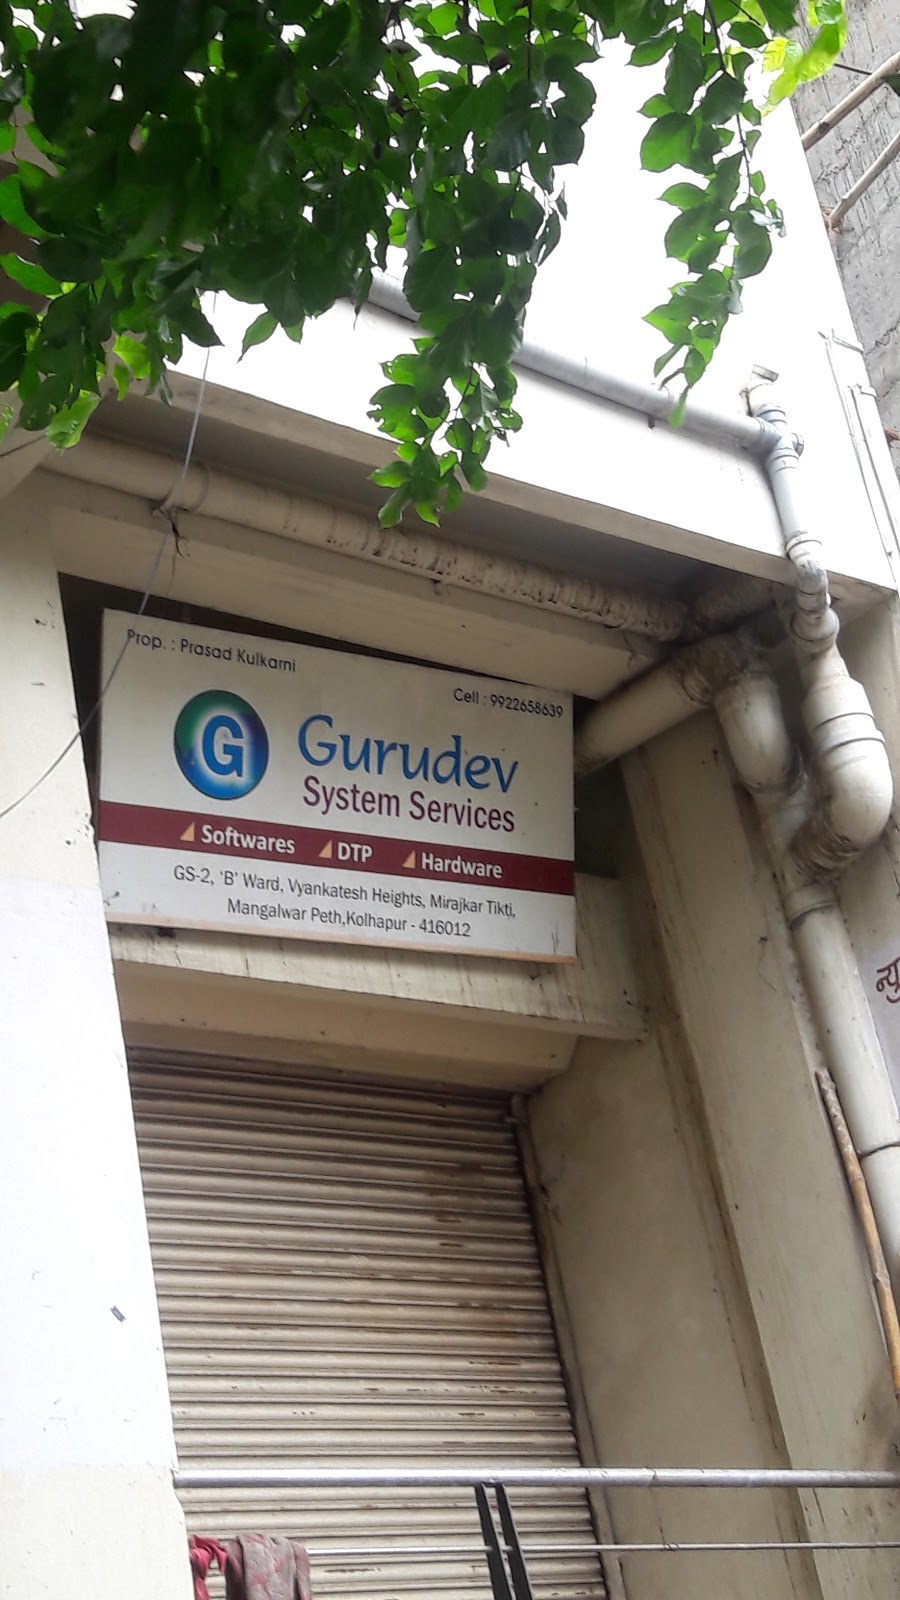 Gurudev System Services